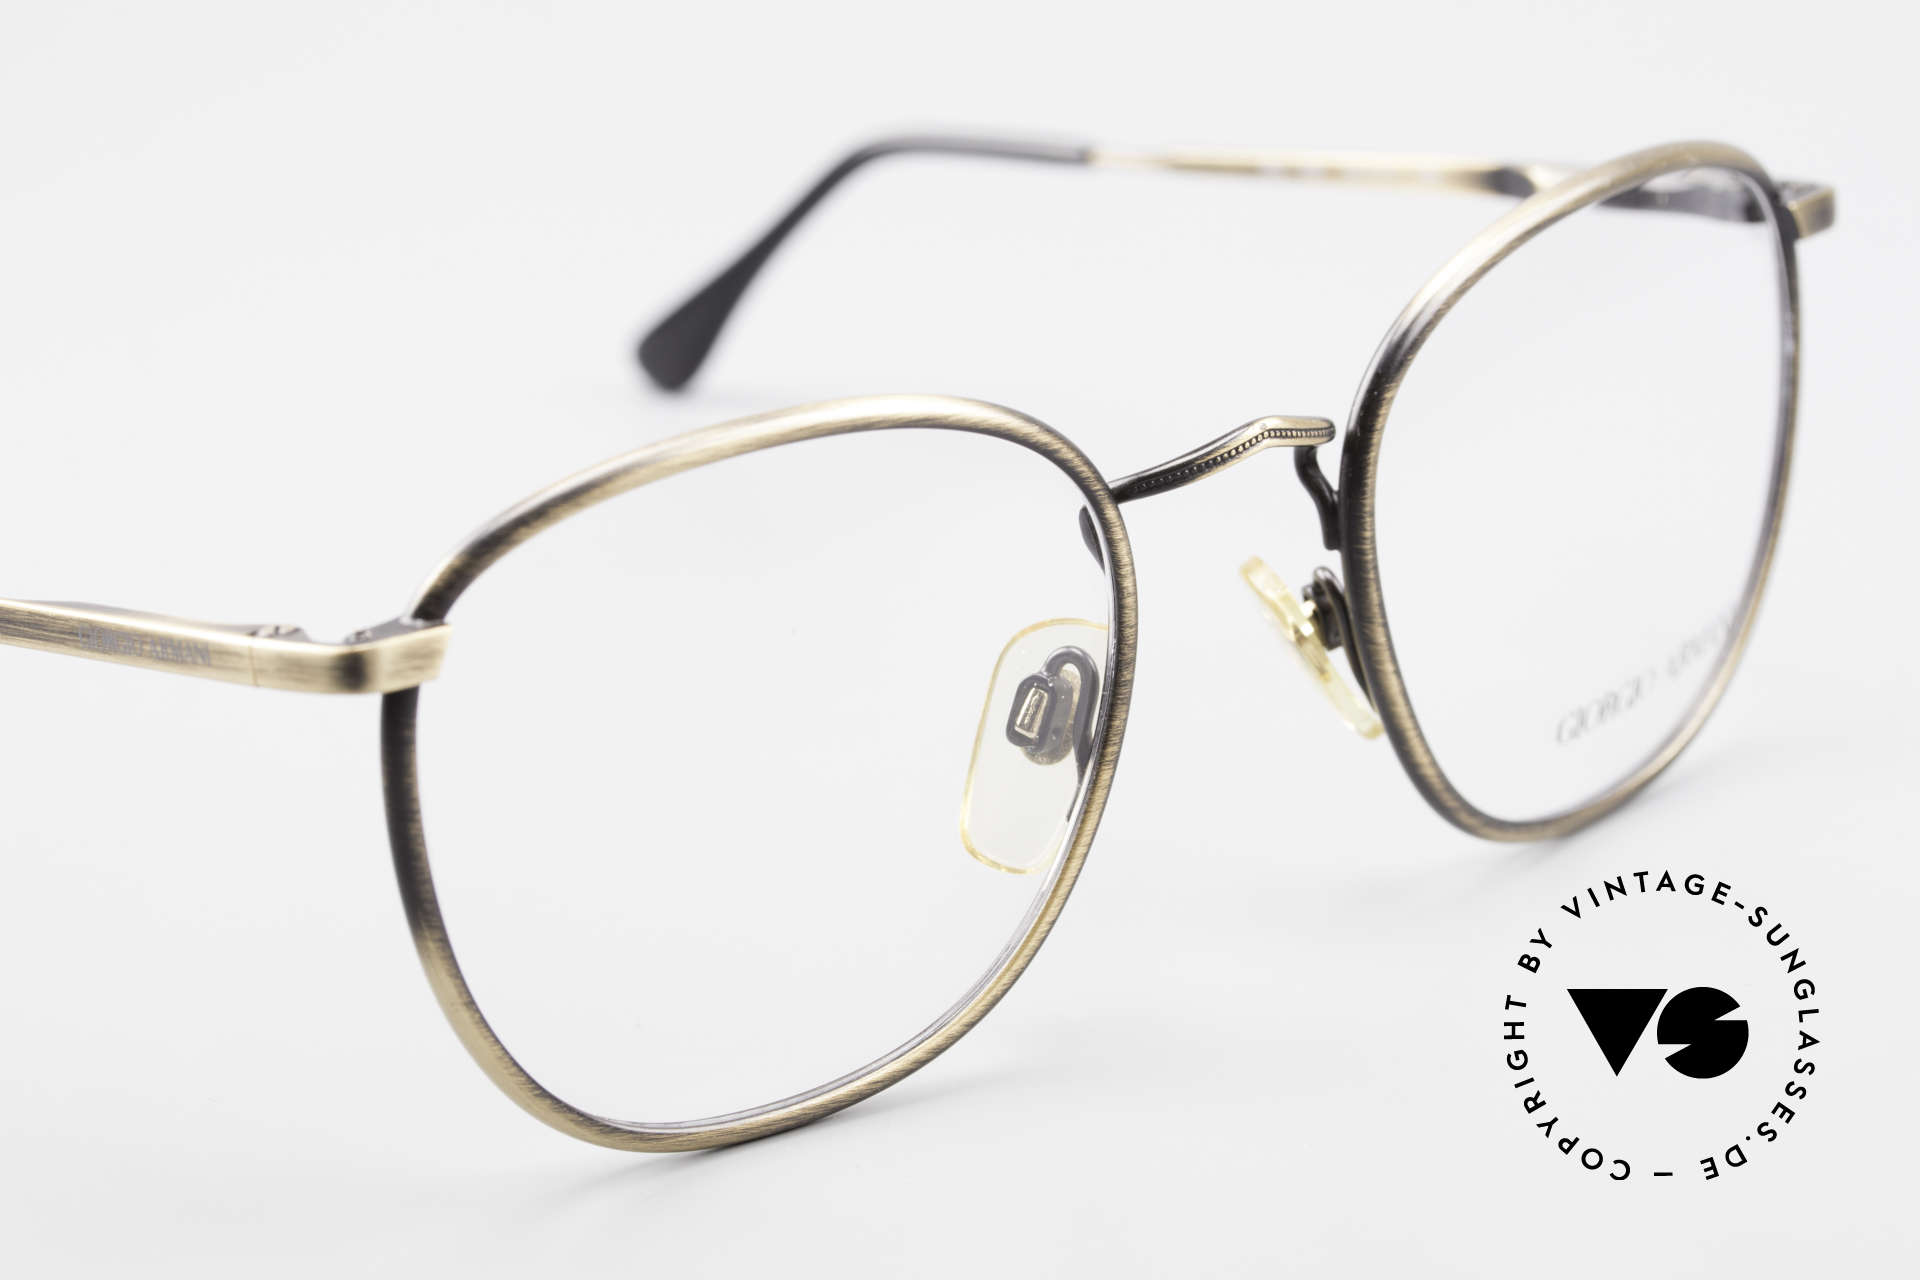 Giorgio Armani 150 Classic Men's Eyeglasses 80's, never worn (like all our vintage Giorgio Armani specs), Made for Men